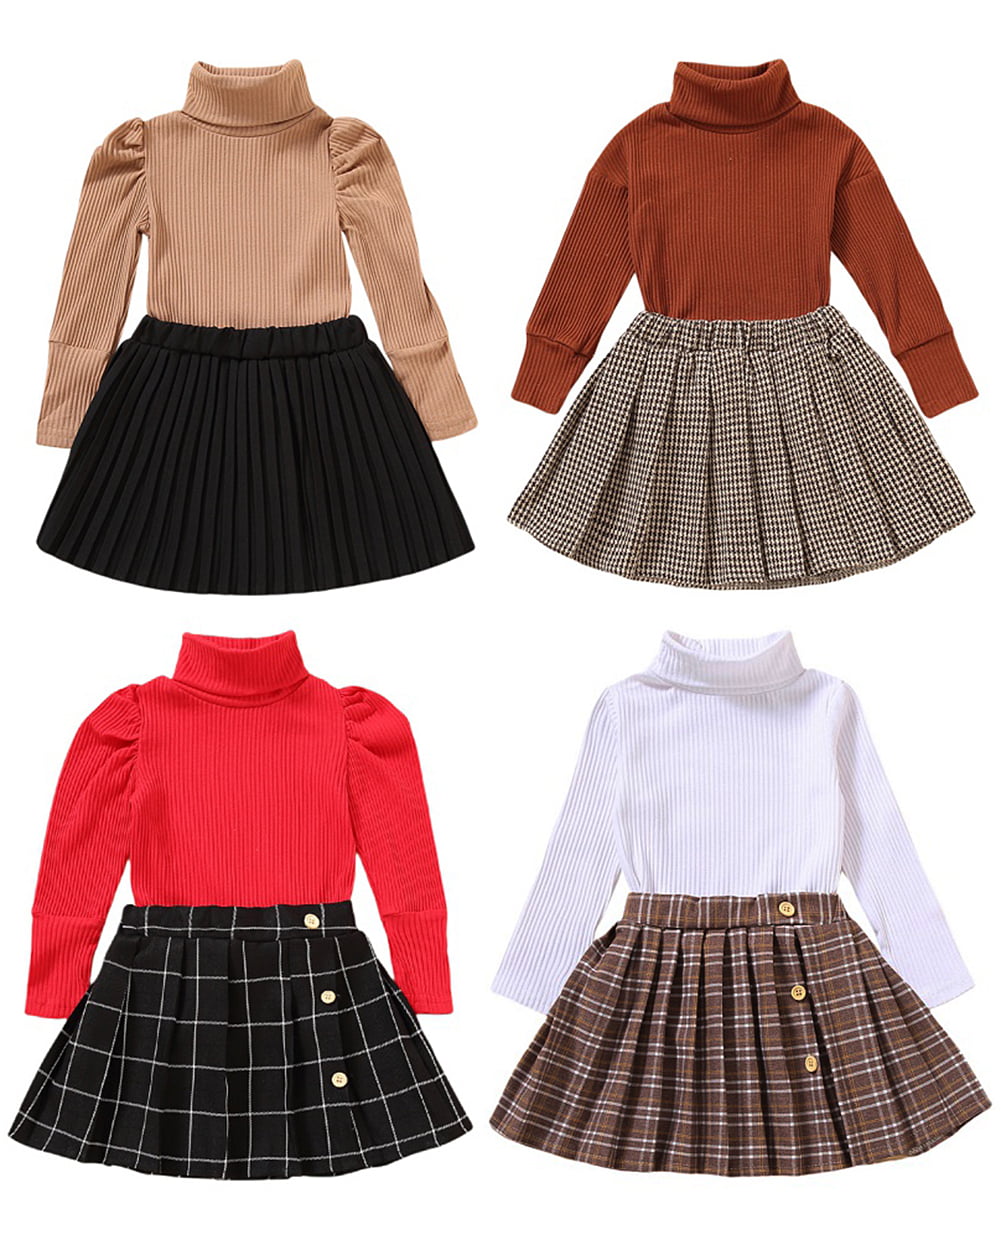 Actoyo Baby Girls Two-piece Set Solid Turtleneck Knitwear Tops Sweater + Pleated Skirt 0-5T Walmart.com